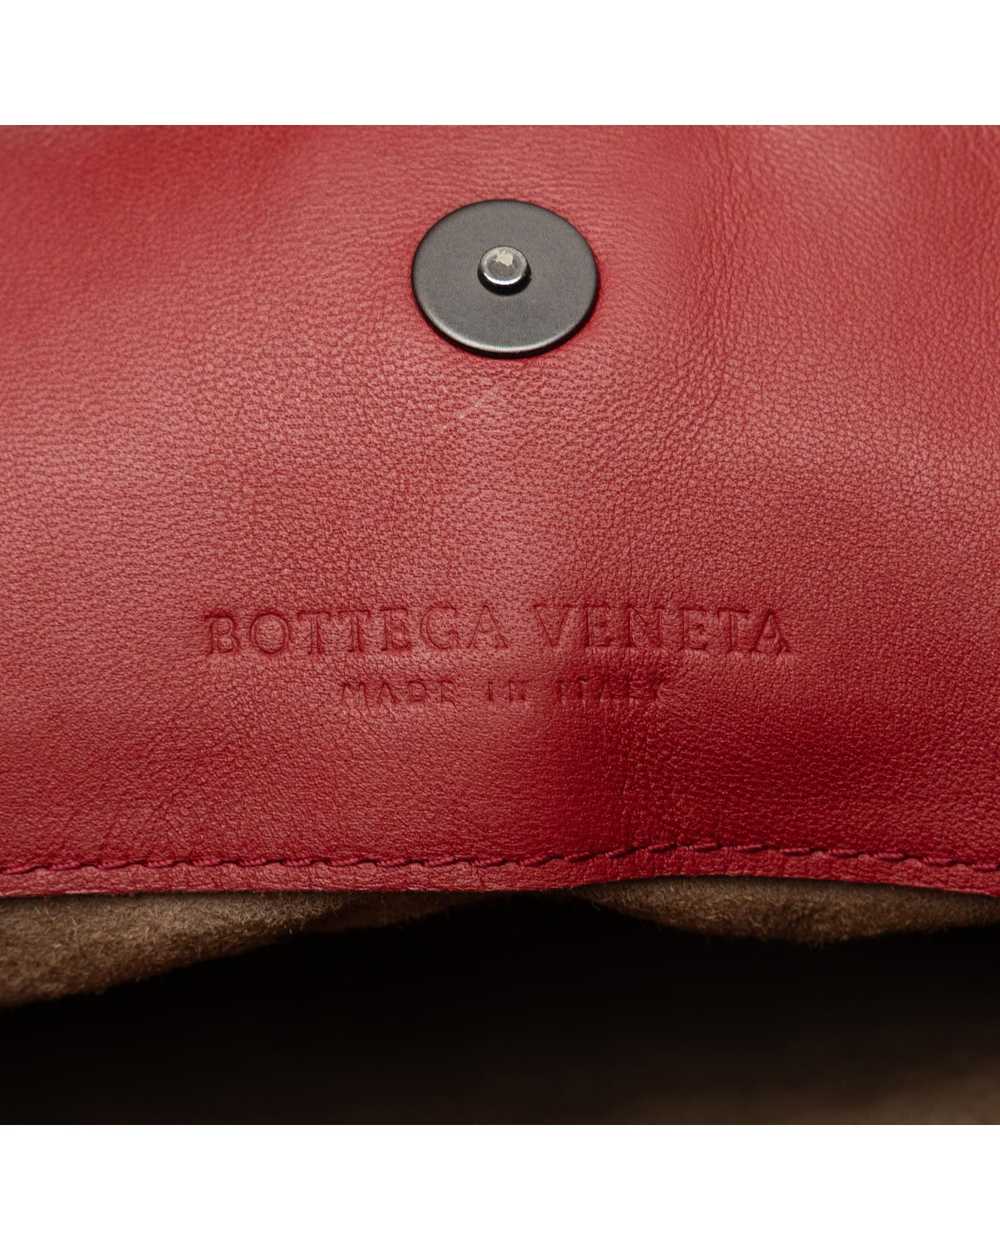 Bottega Veneta Woven Leather Double Chain Tote Bag - image 7